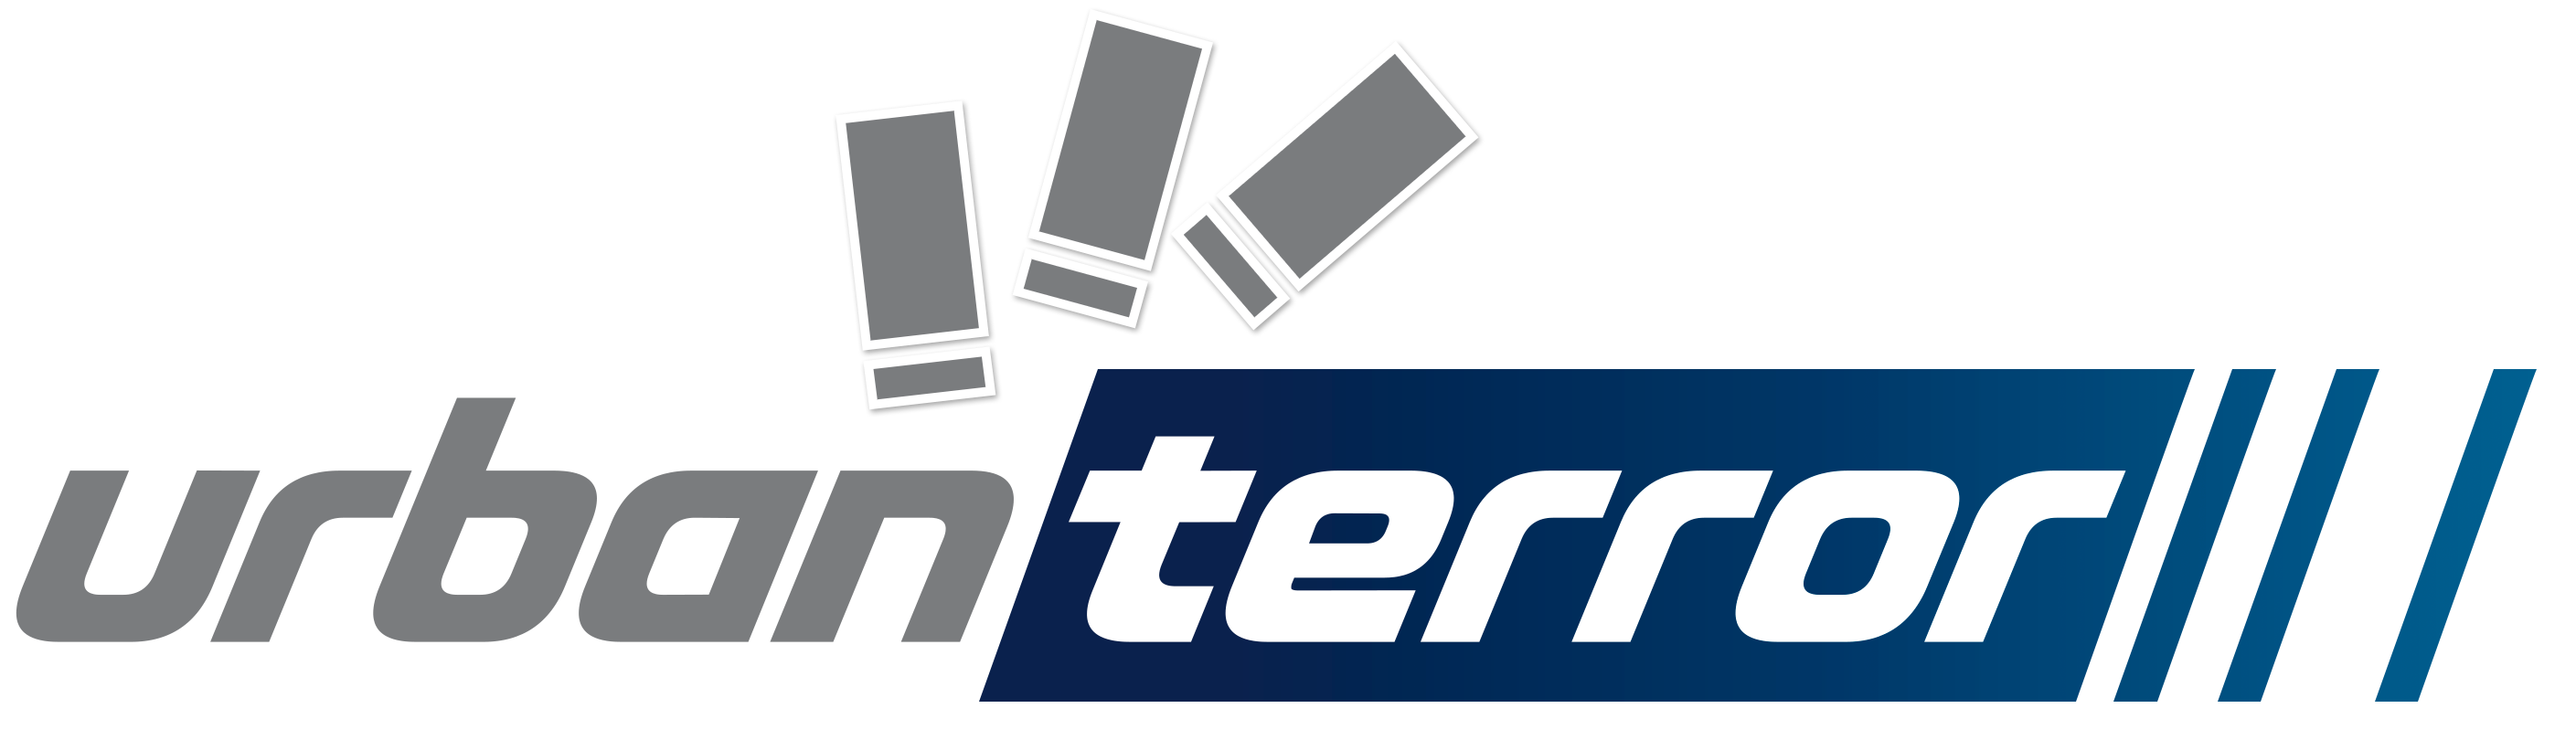 Urban Terror Logo photo - 1